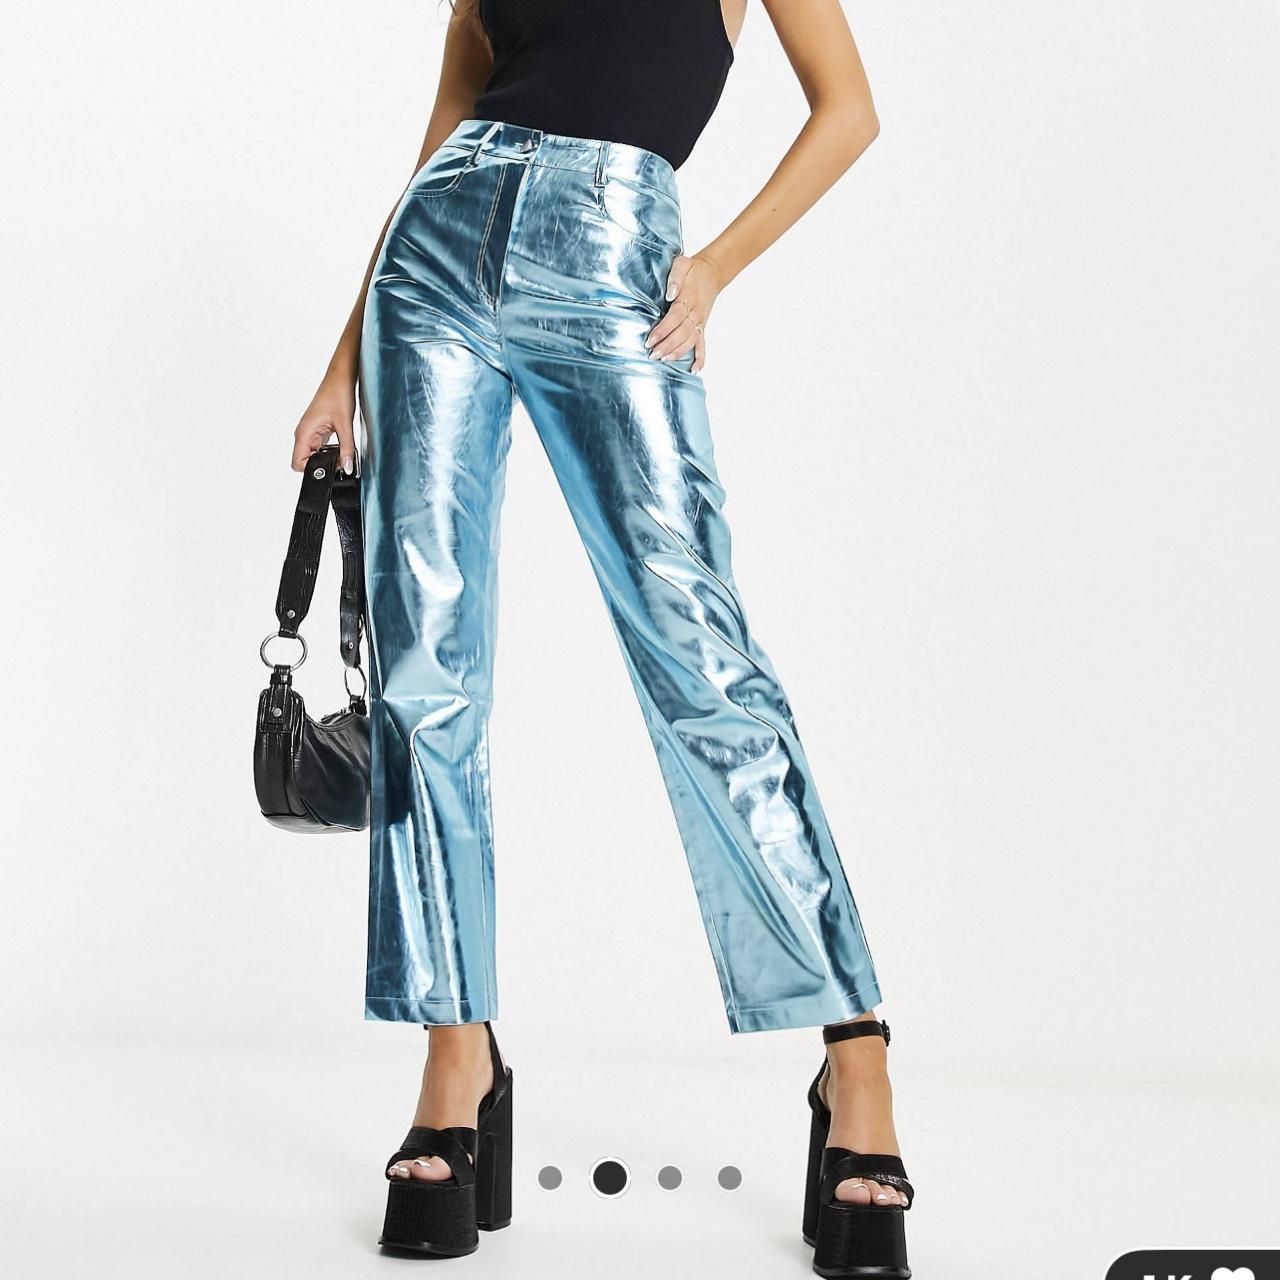 amy lynn metallic pants Brand new with tags - Depop